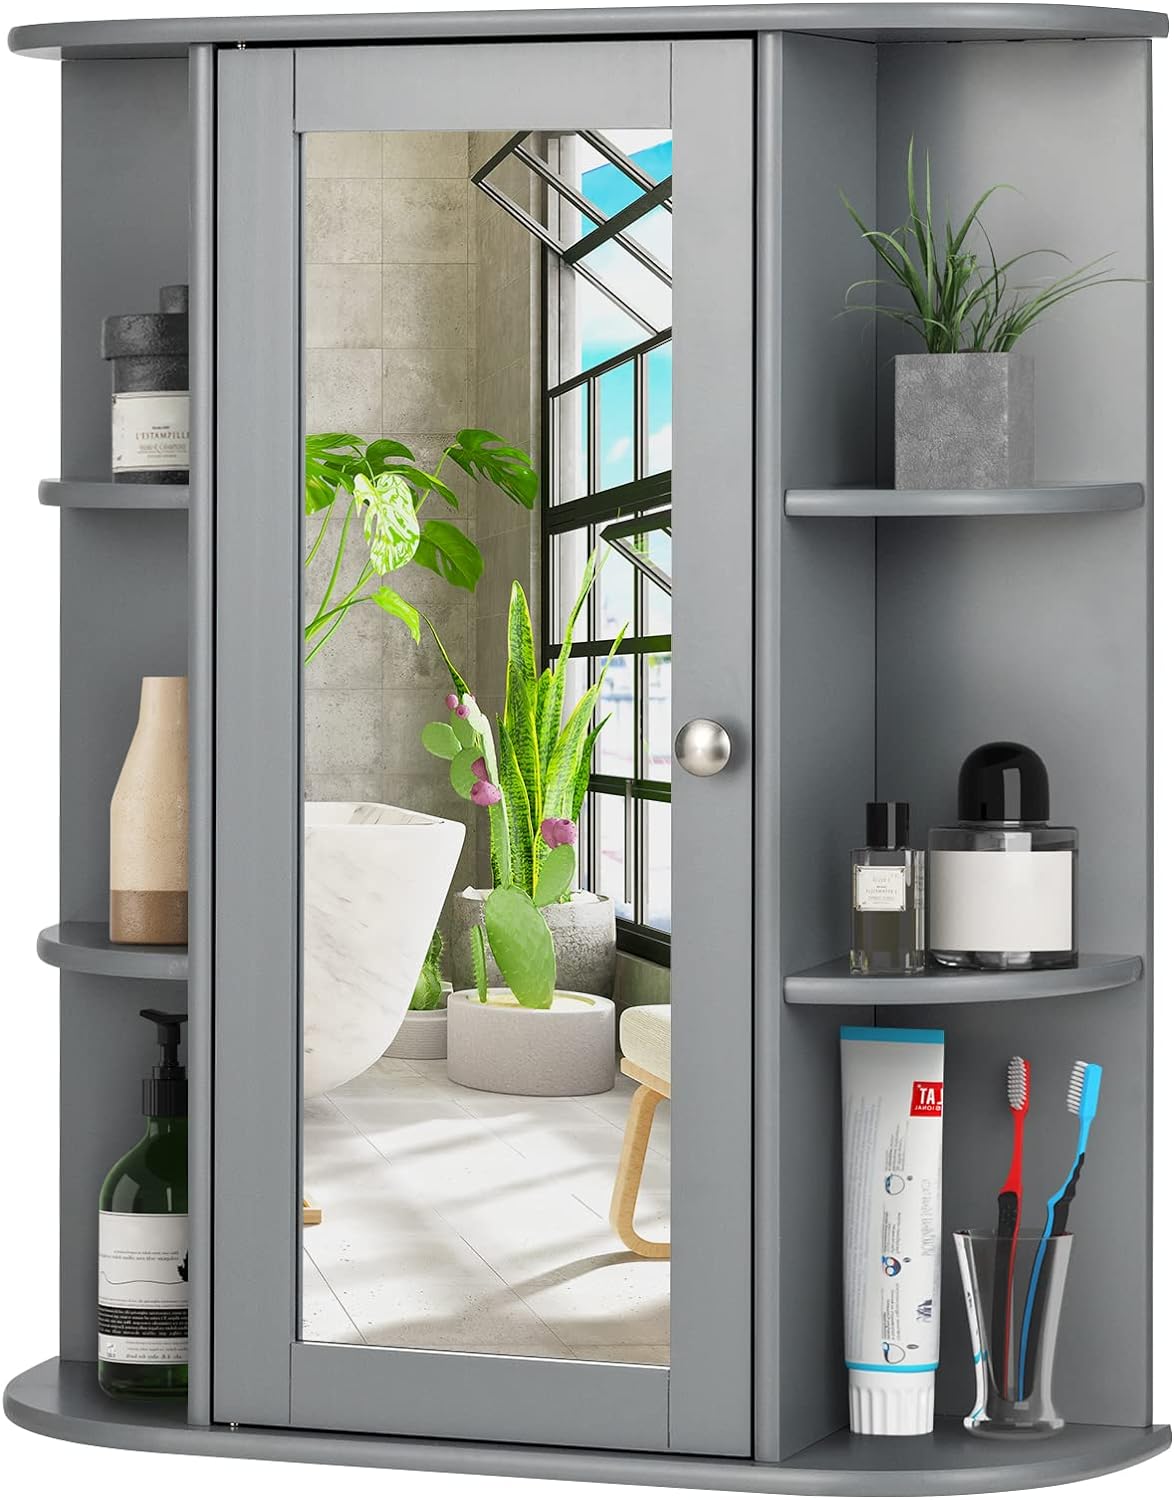 COSTWAY Wall Mounted Bathroom Cabinet - Storage Organizer with Mirror Door, Adjustable Shelves & 6 Open Racks, Space-Saving Hanging Medicine Cabinet for Living Room Kitchen Entryway (Gray)